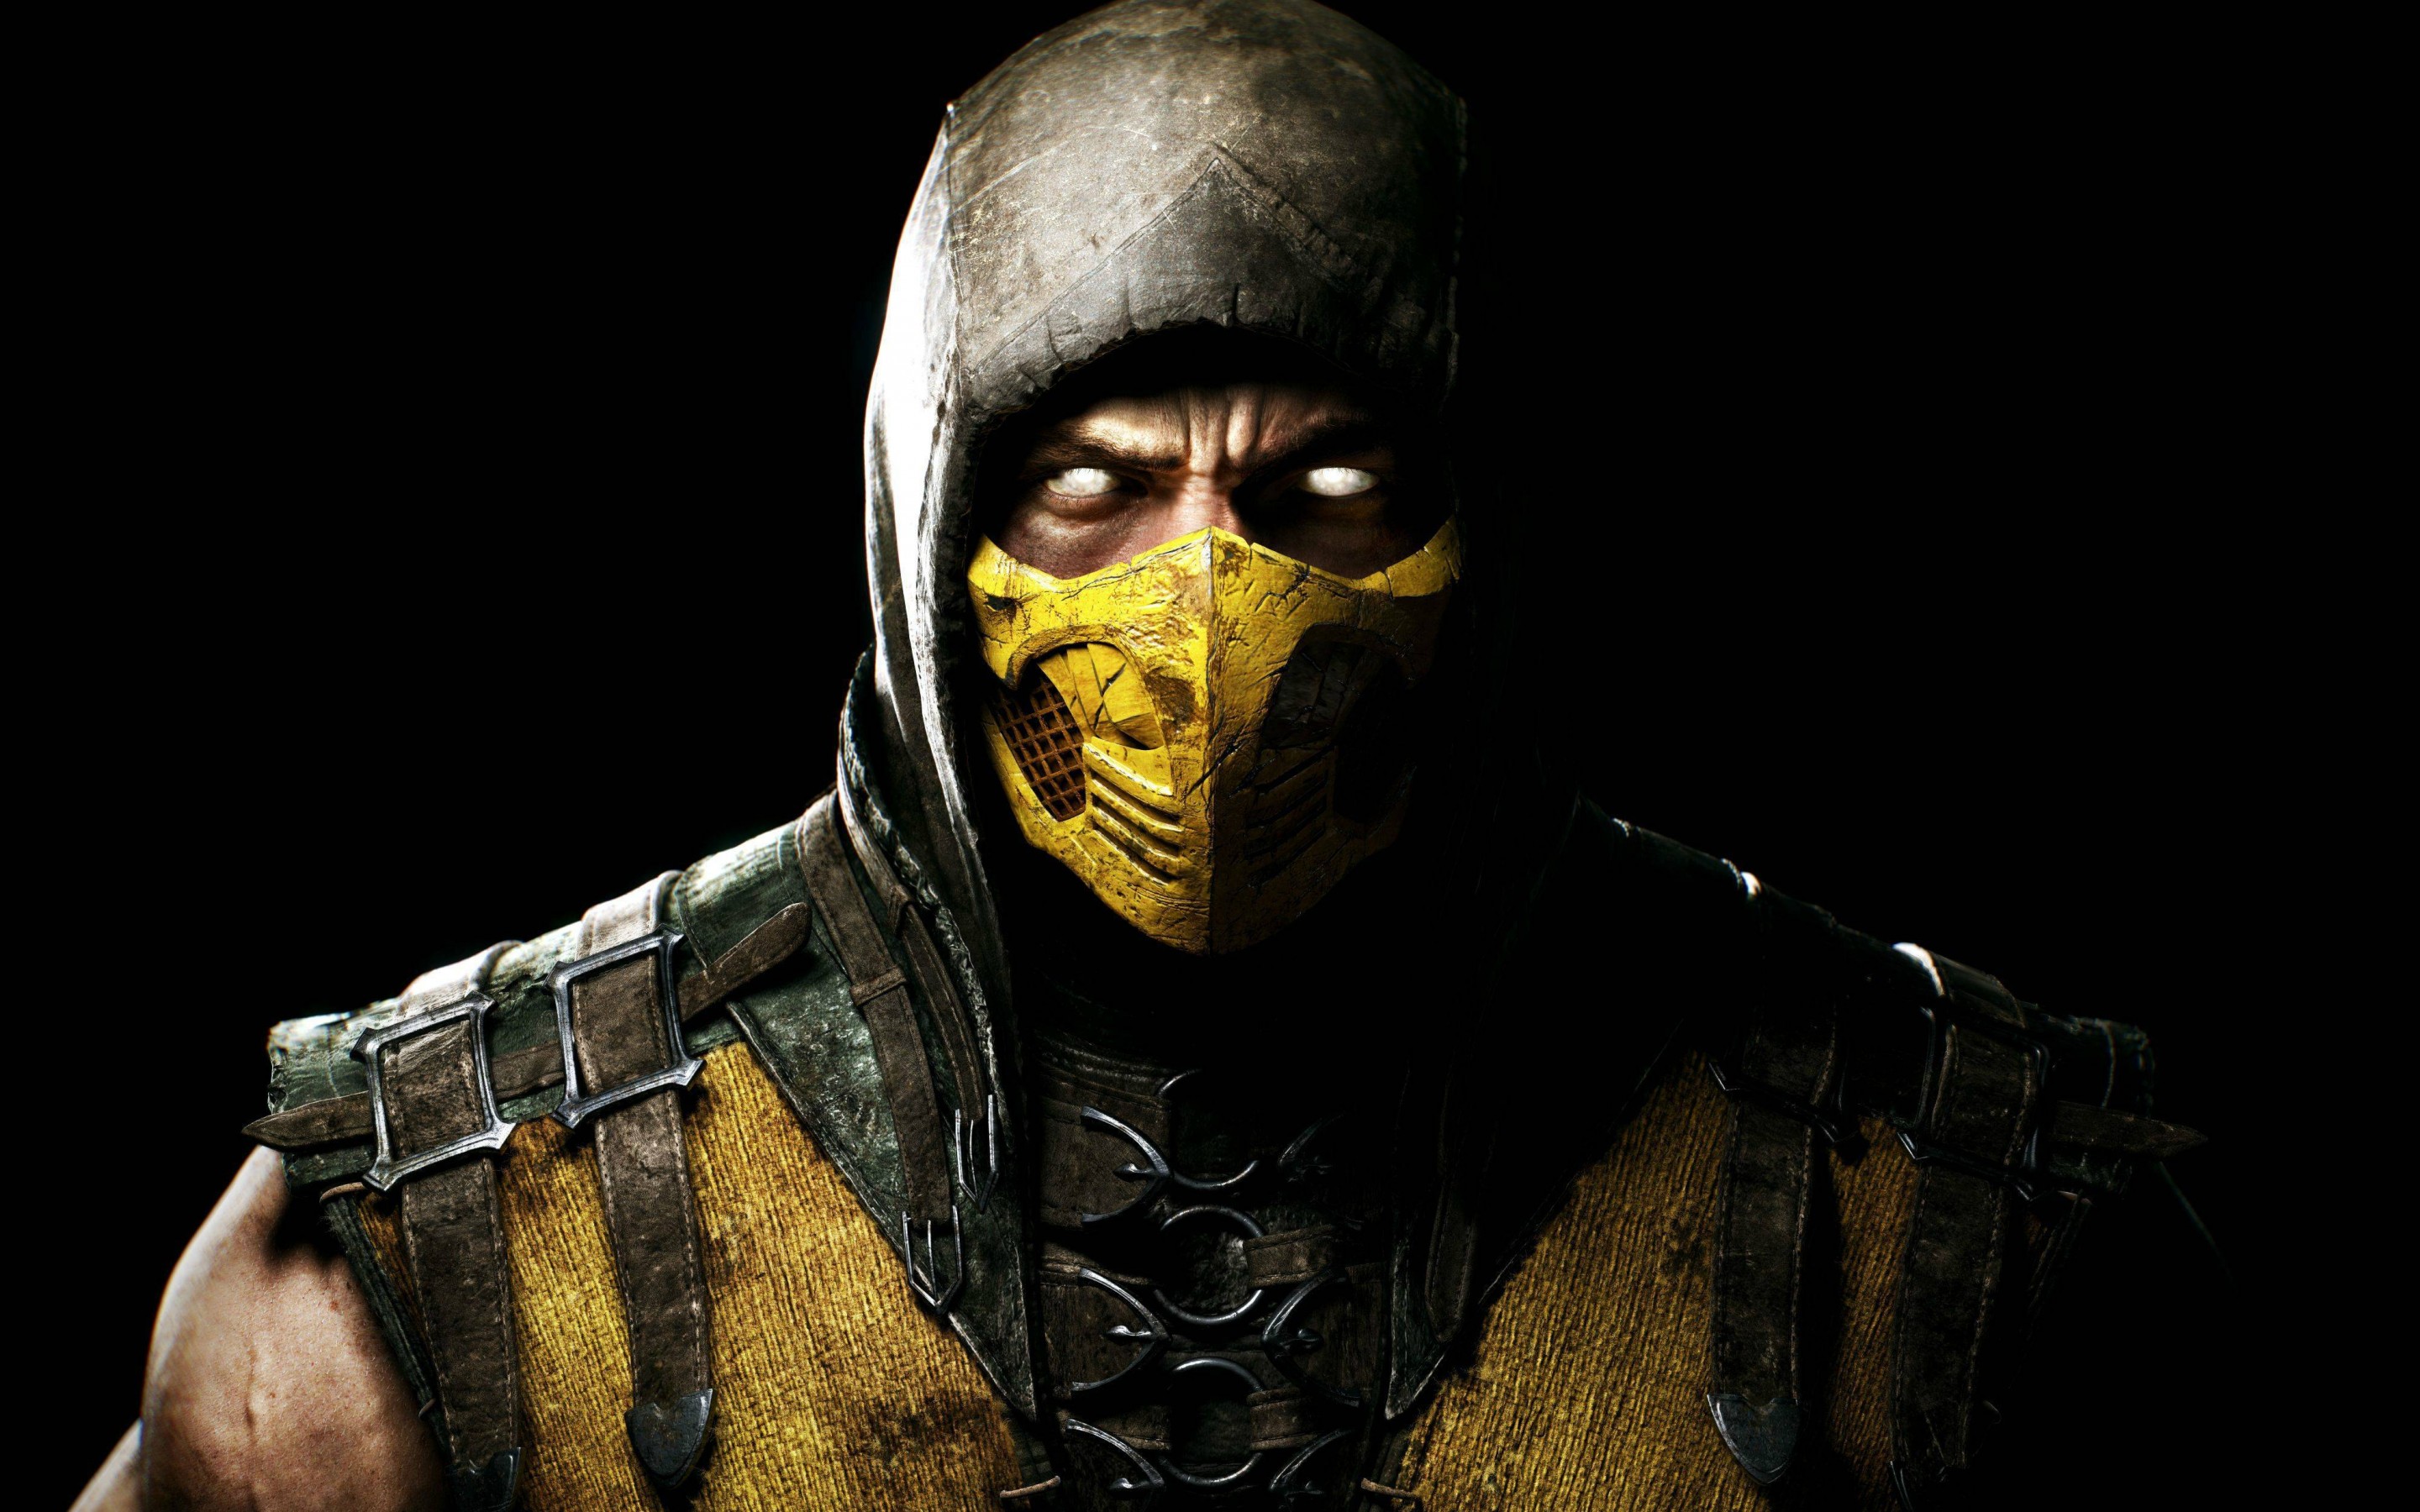 Mortal Kombat X HD Wallpaper Background Image